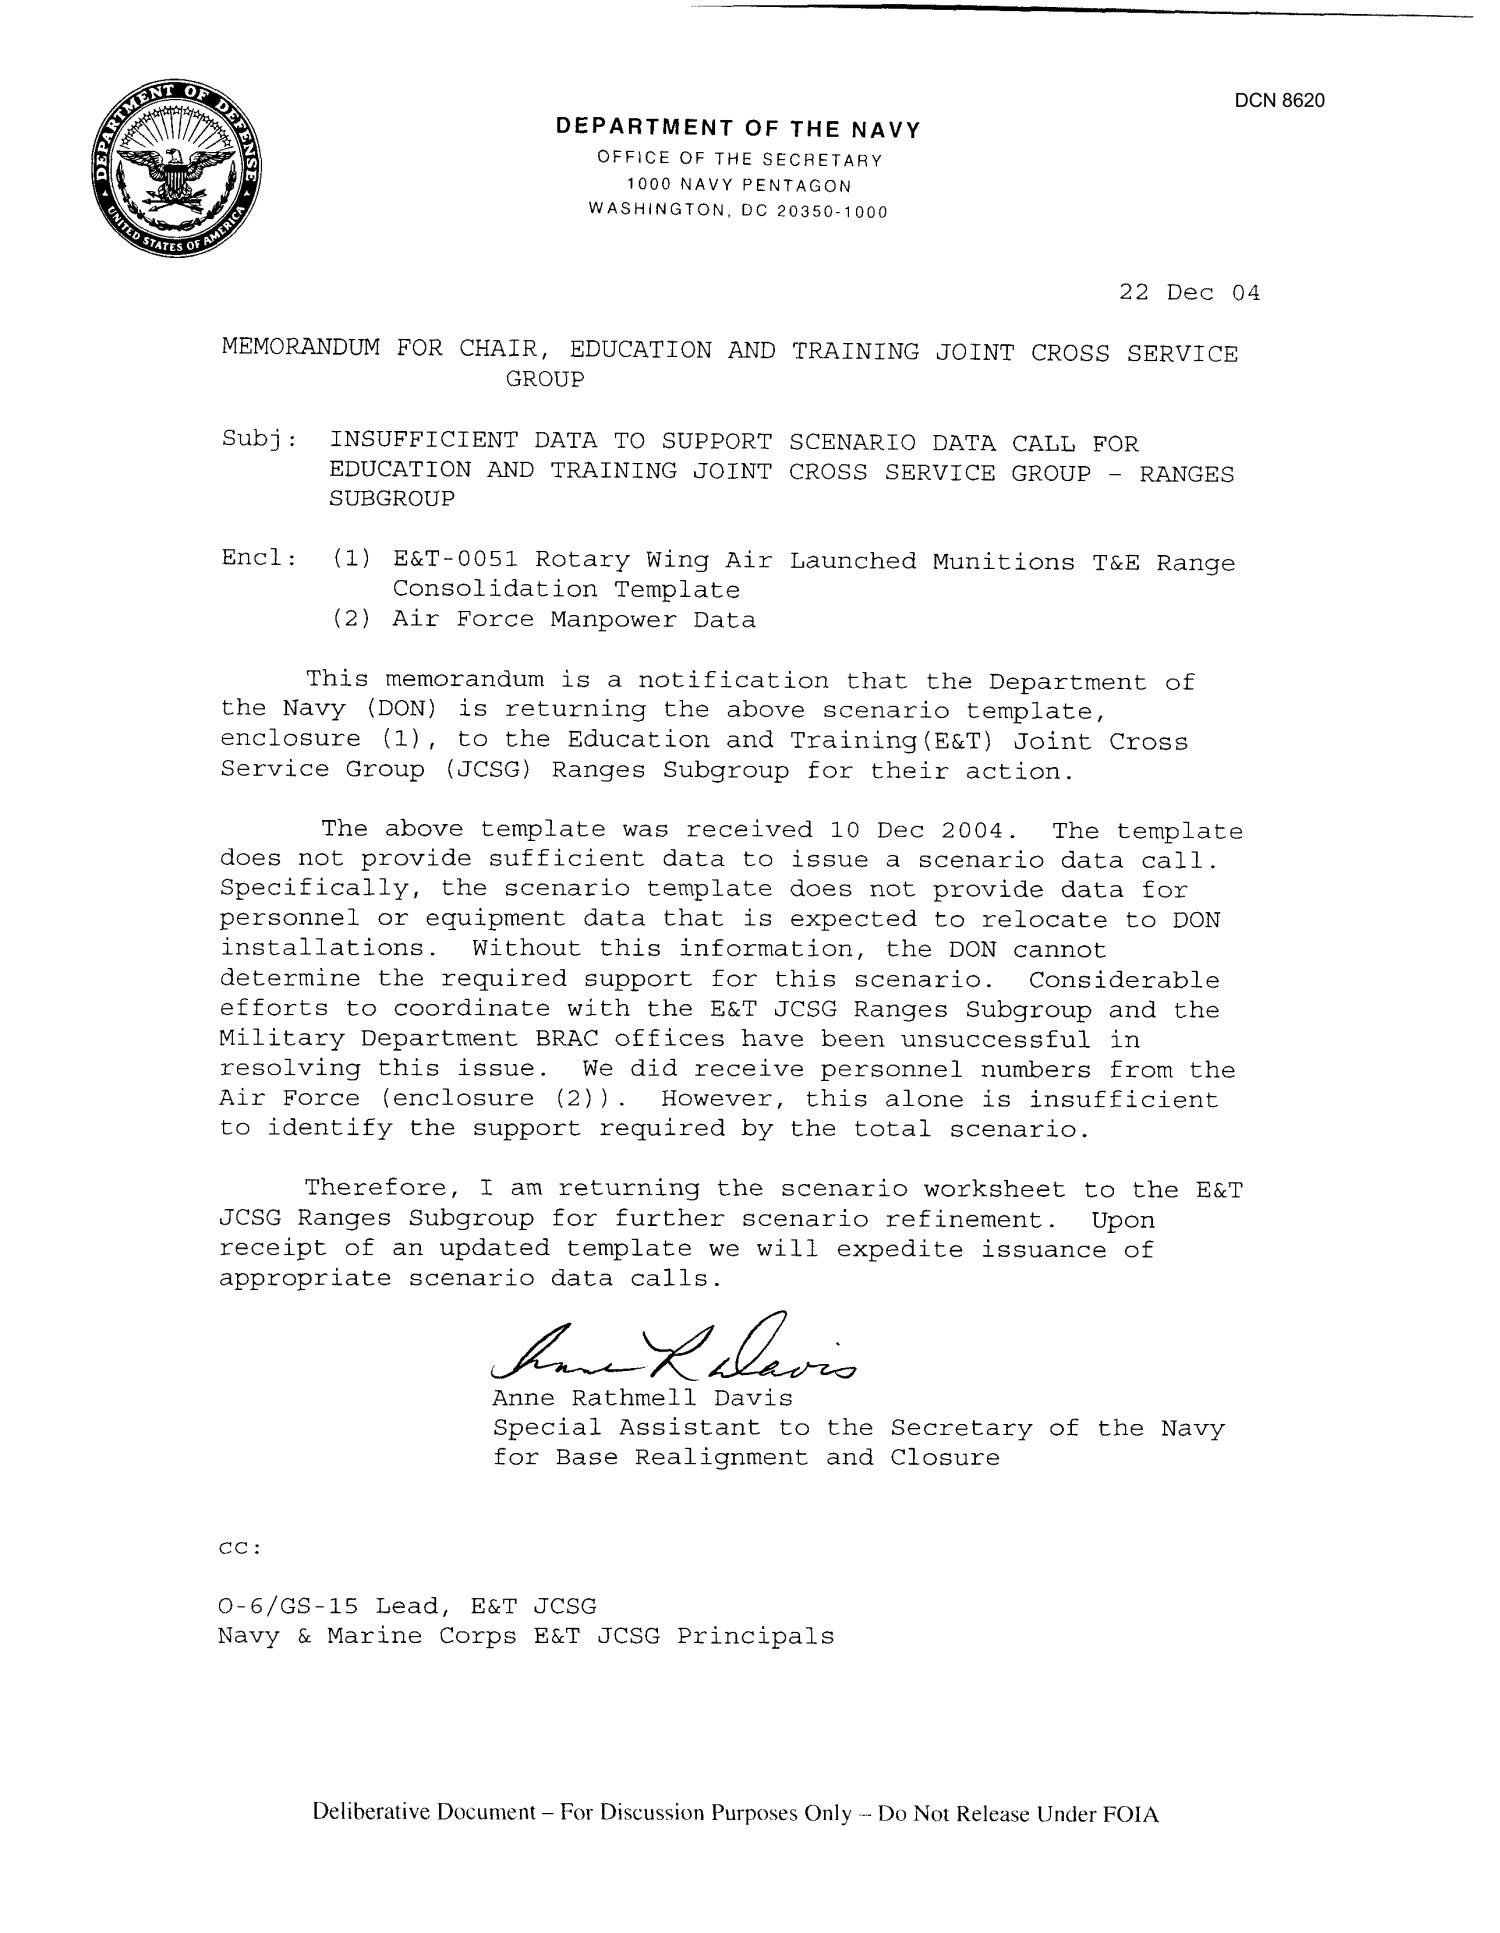 Department of the Navy Memorandum for Chair Education